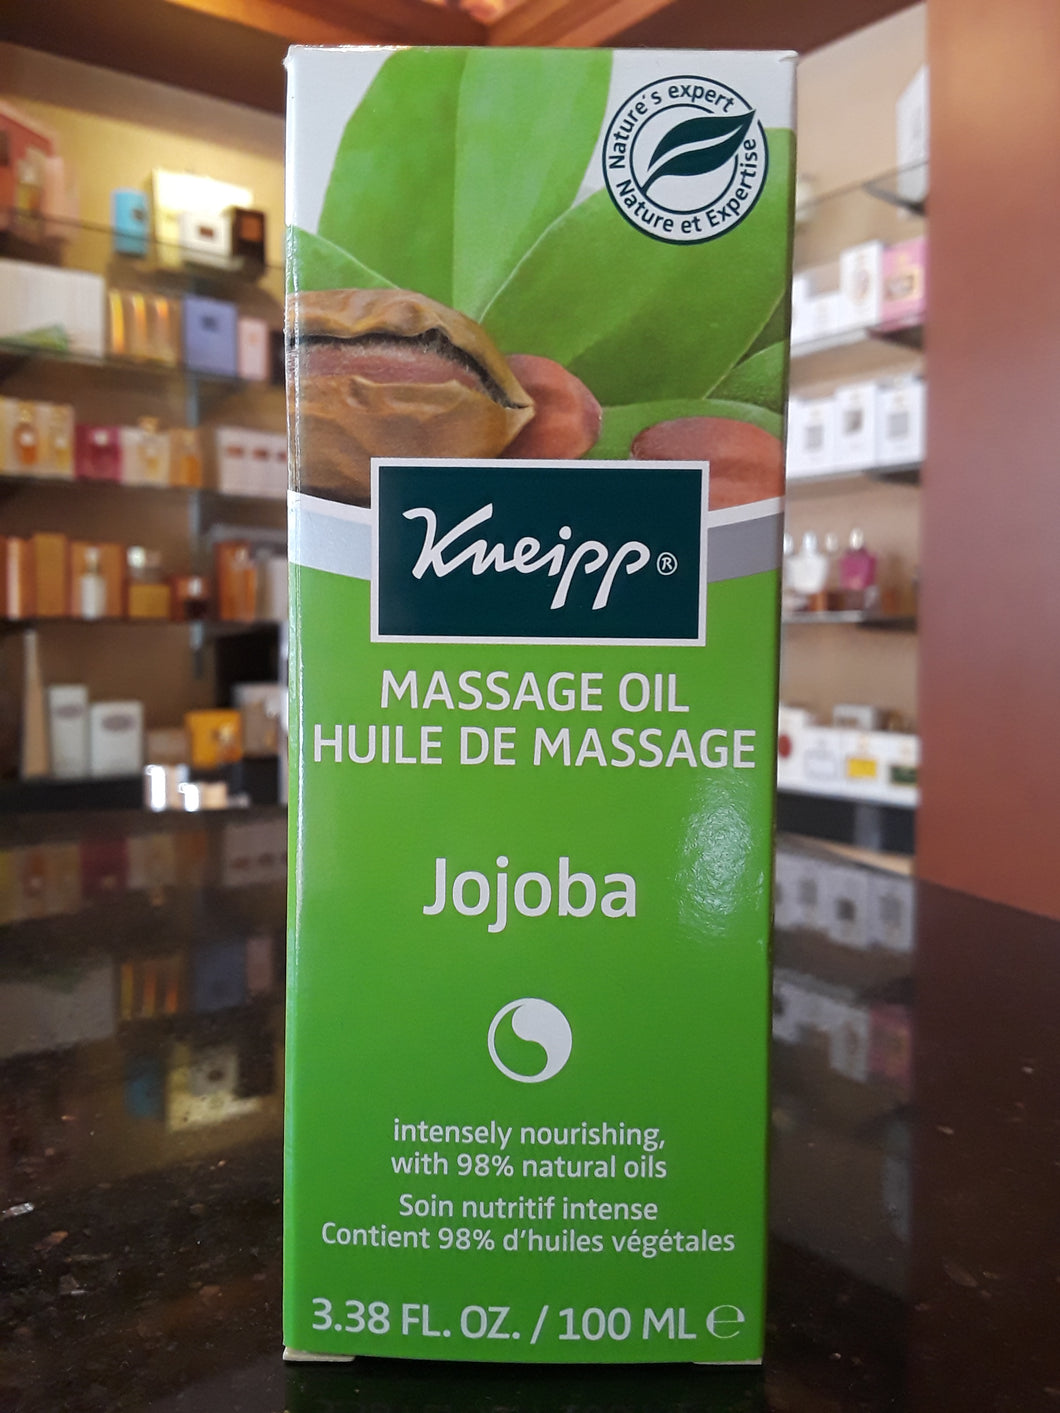 Jojoba massage oil